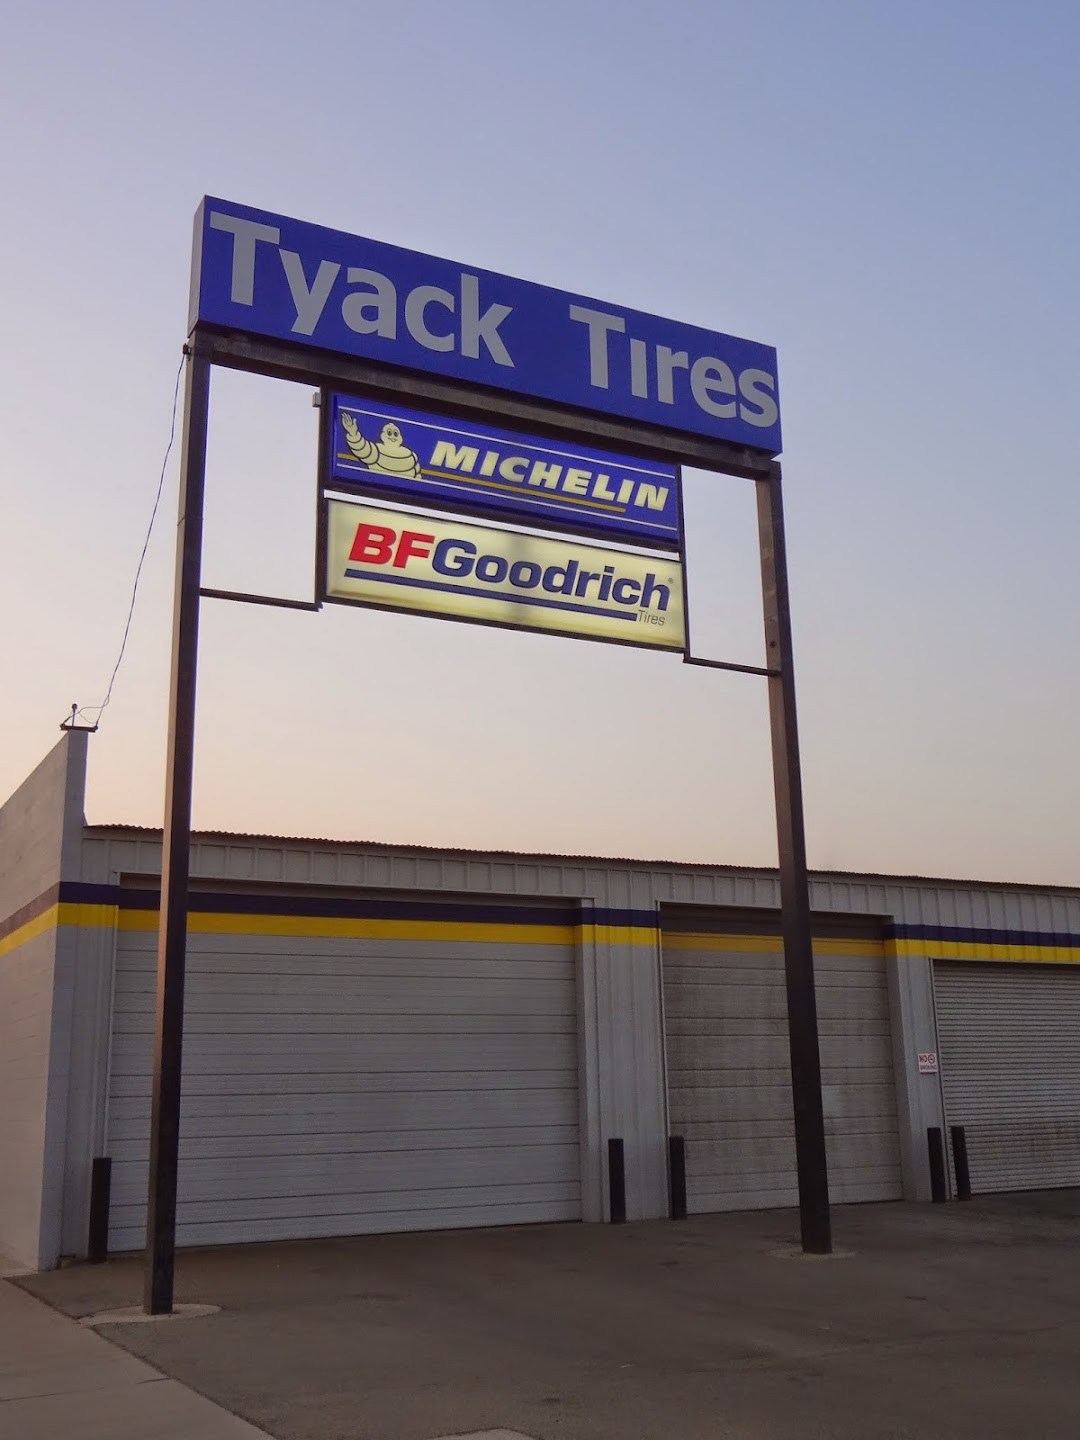 Tyack Tires, Inc